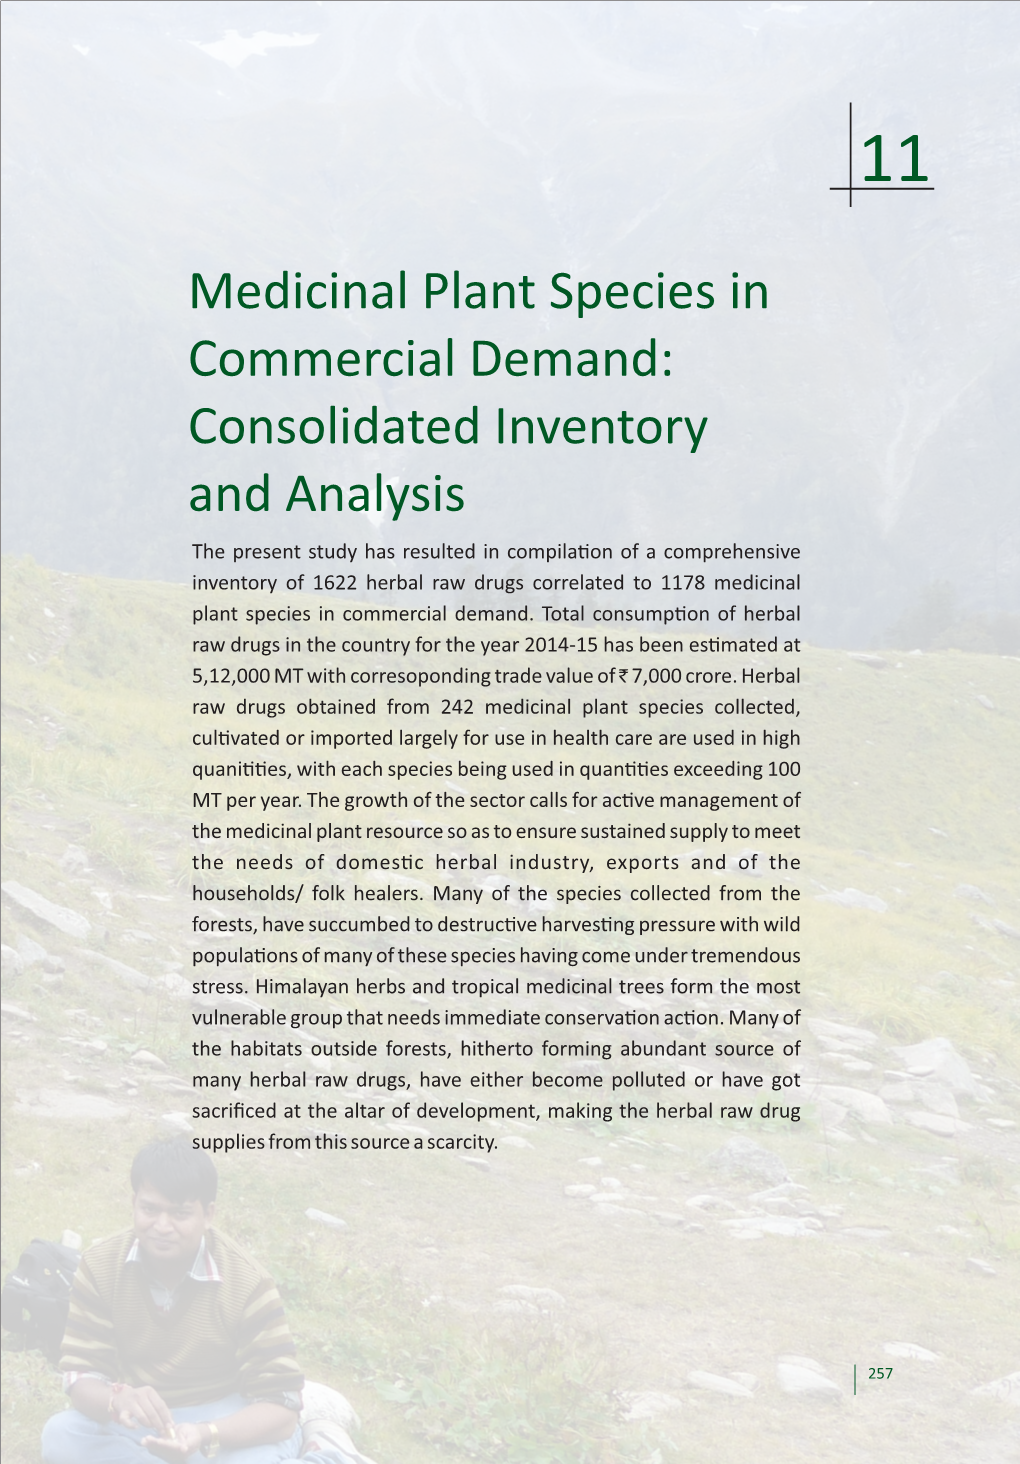 Medicinal Plant Species in Commercial Demand